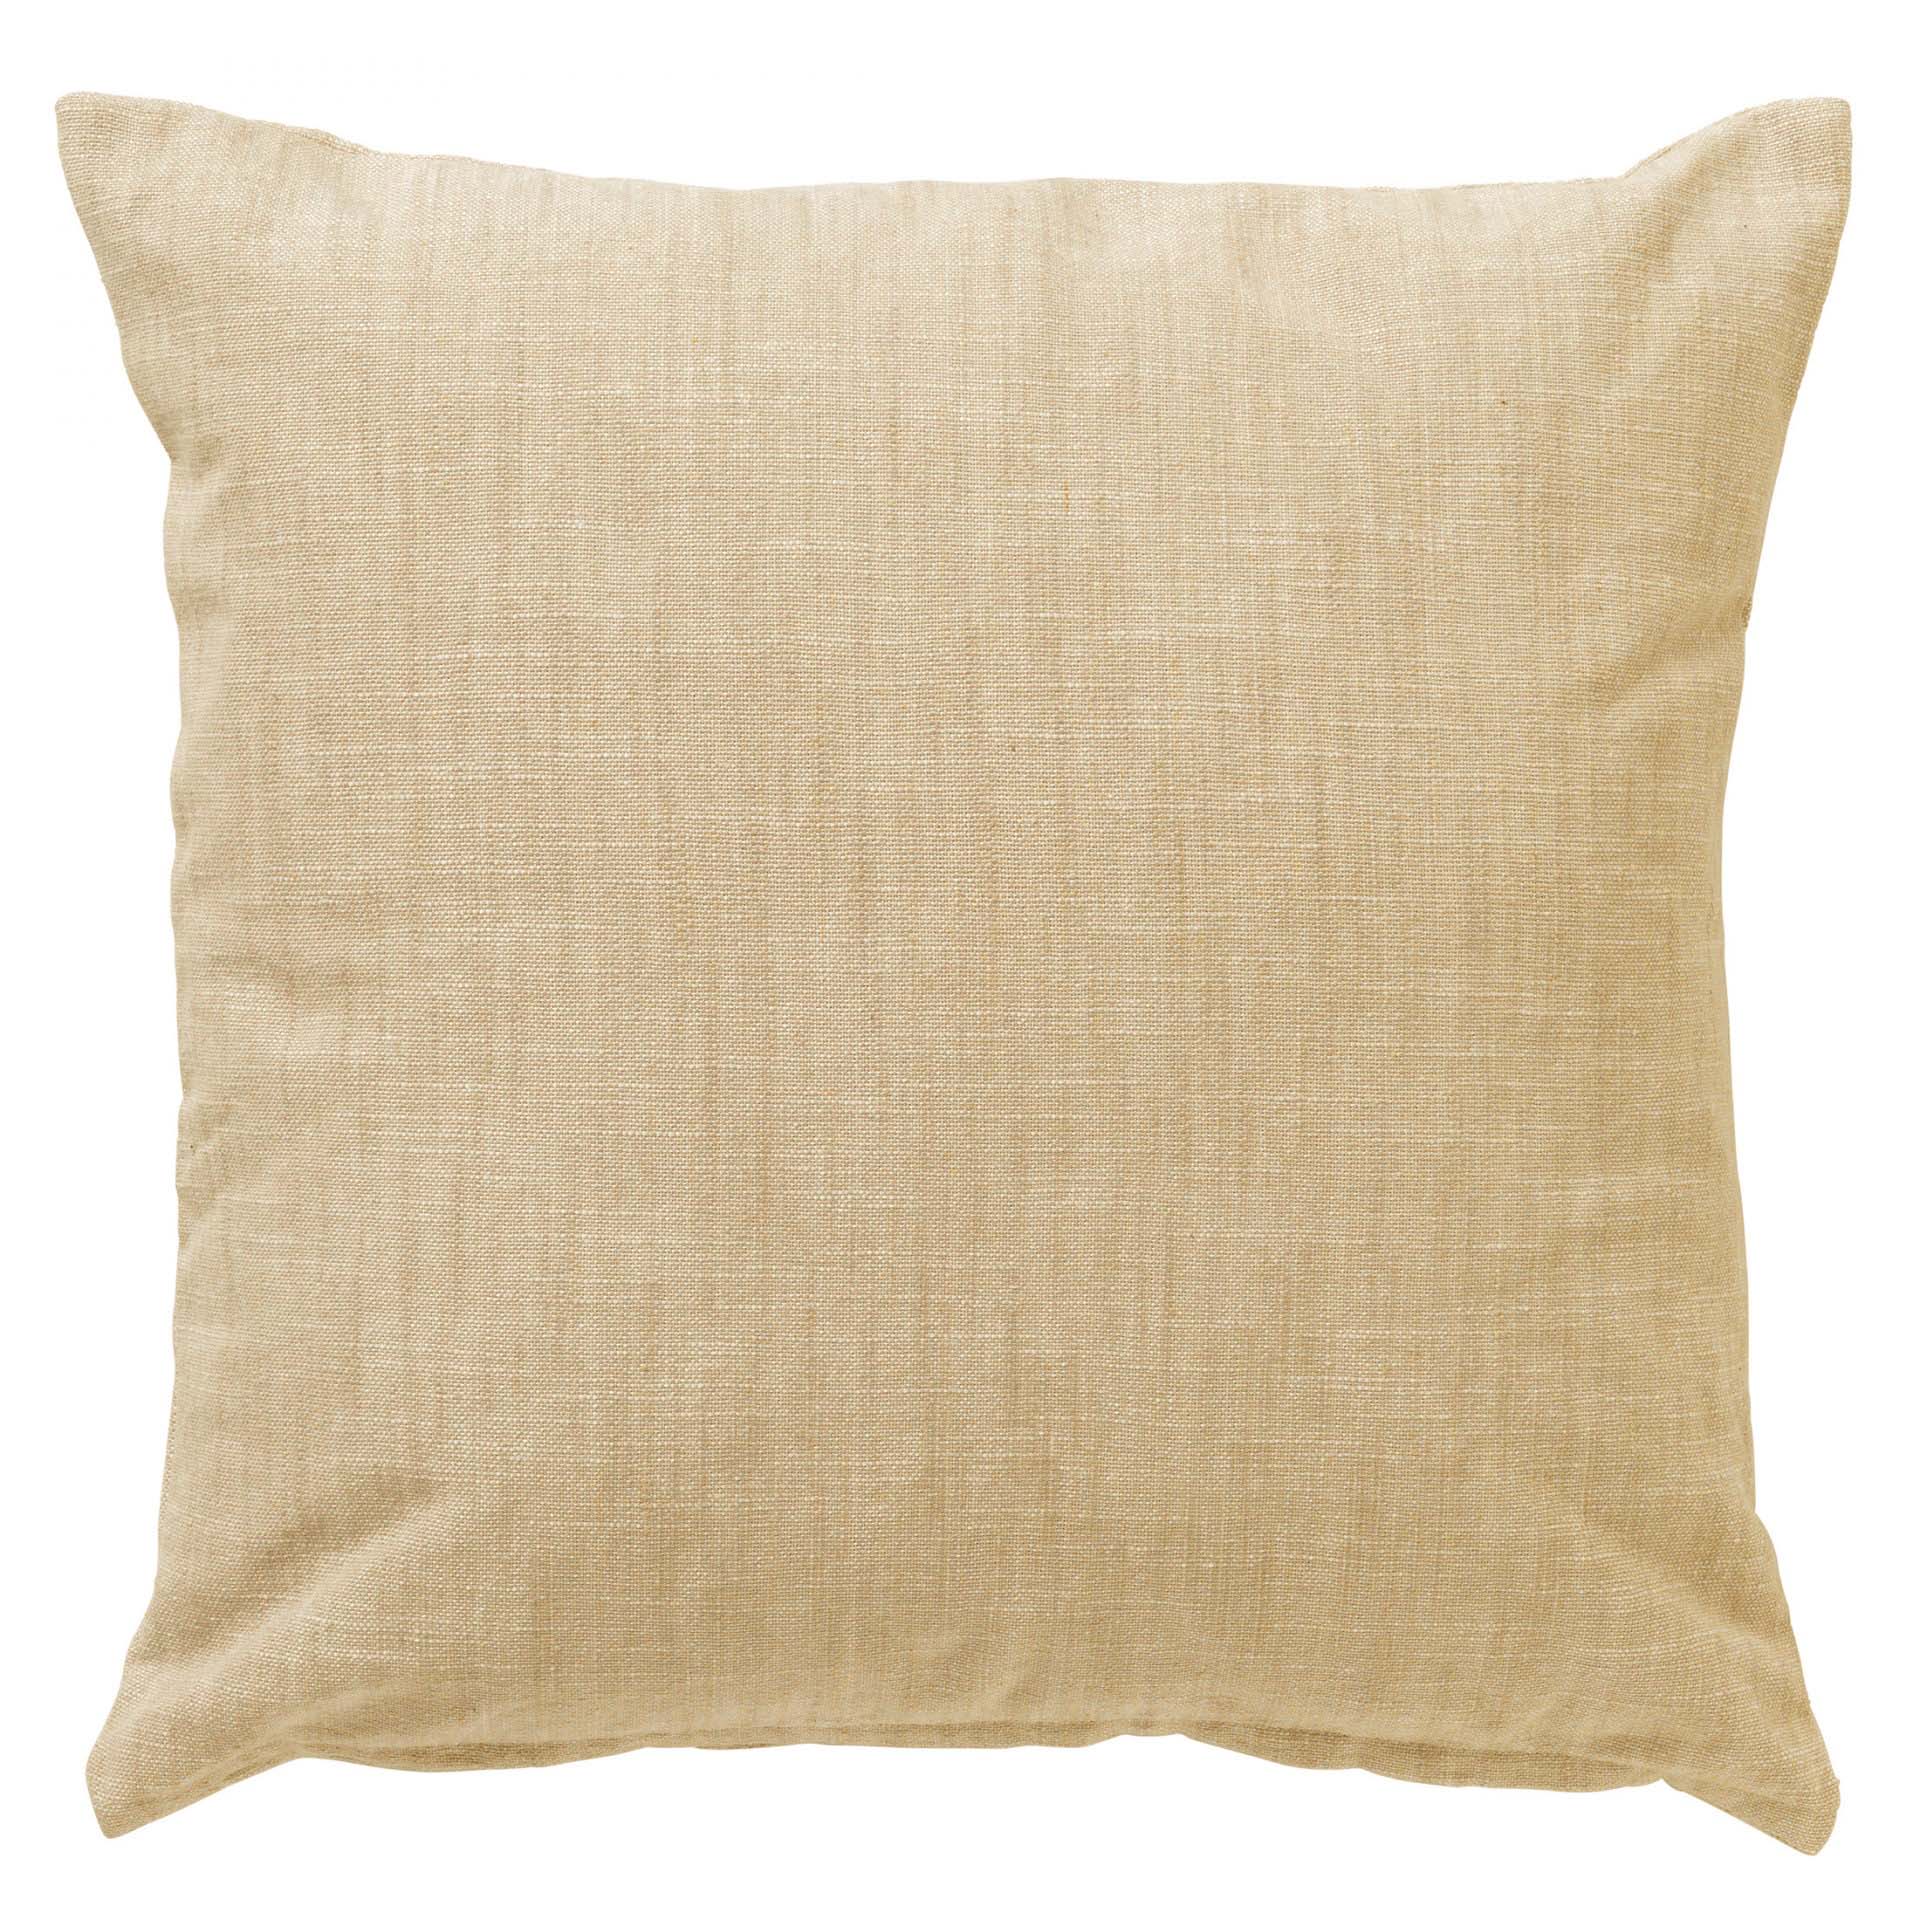 NATURA - Cushion 100% cotton 45x45 cm Pumice Stone - beige